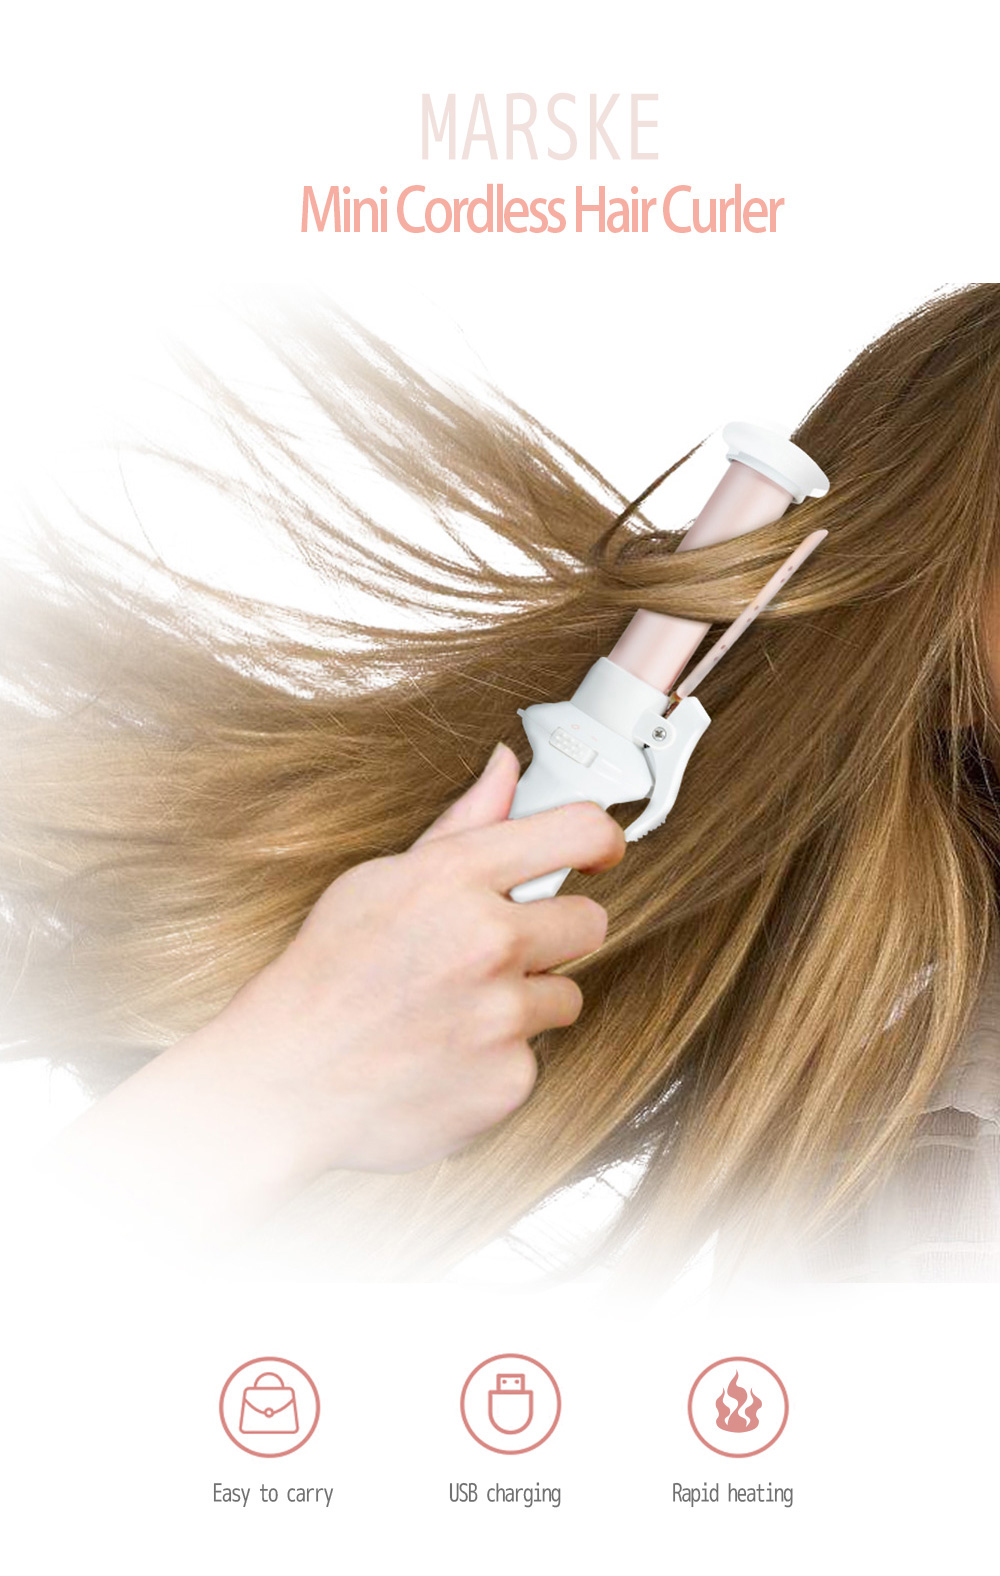 MARSKE MS - 5900 Portable USB Charging Professional Mini Cordless Hair Curler